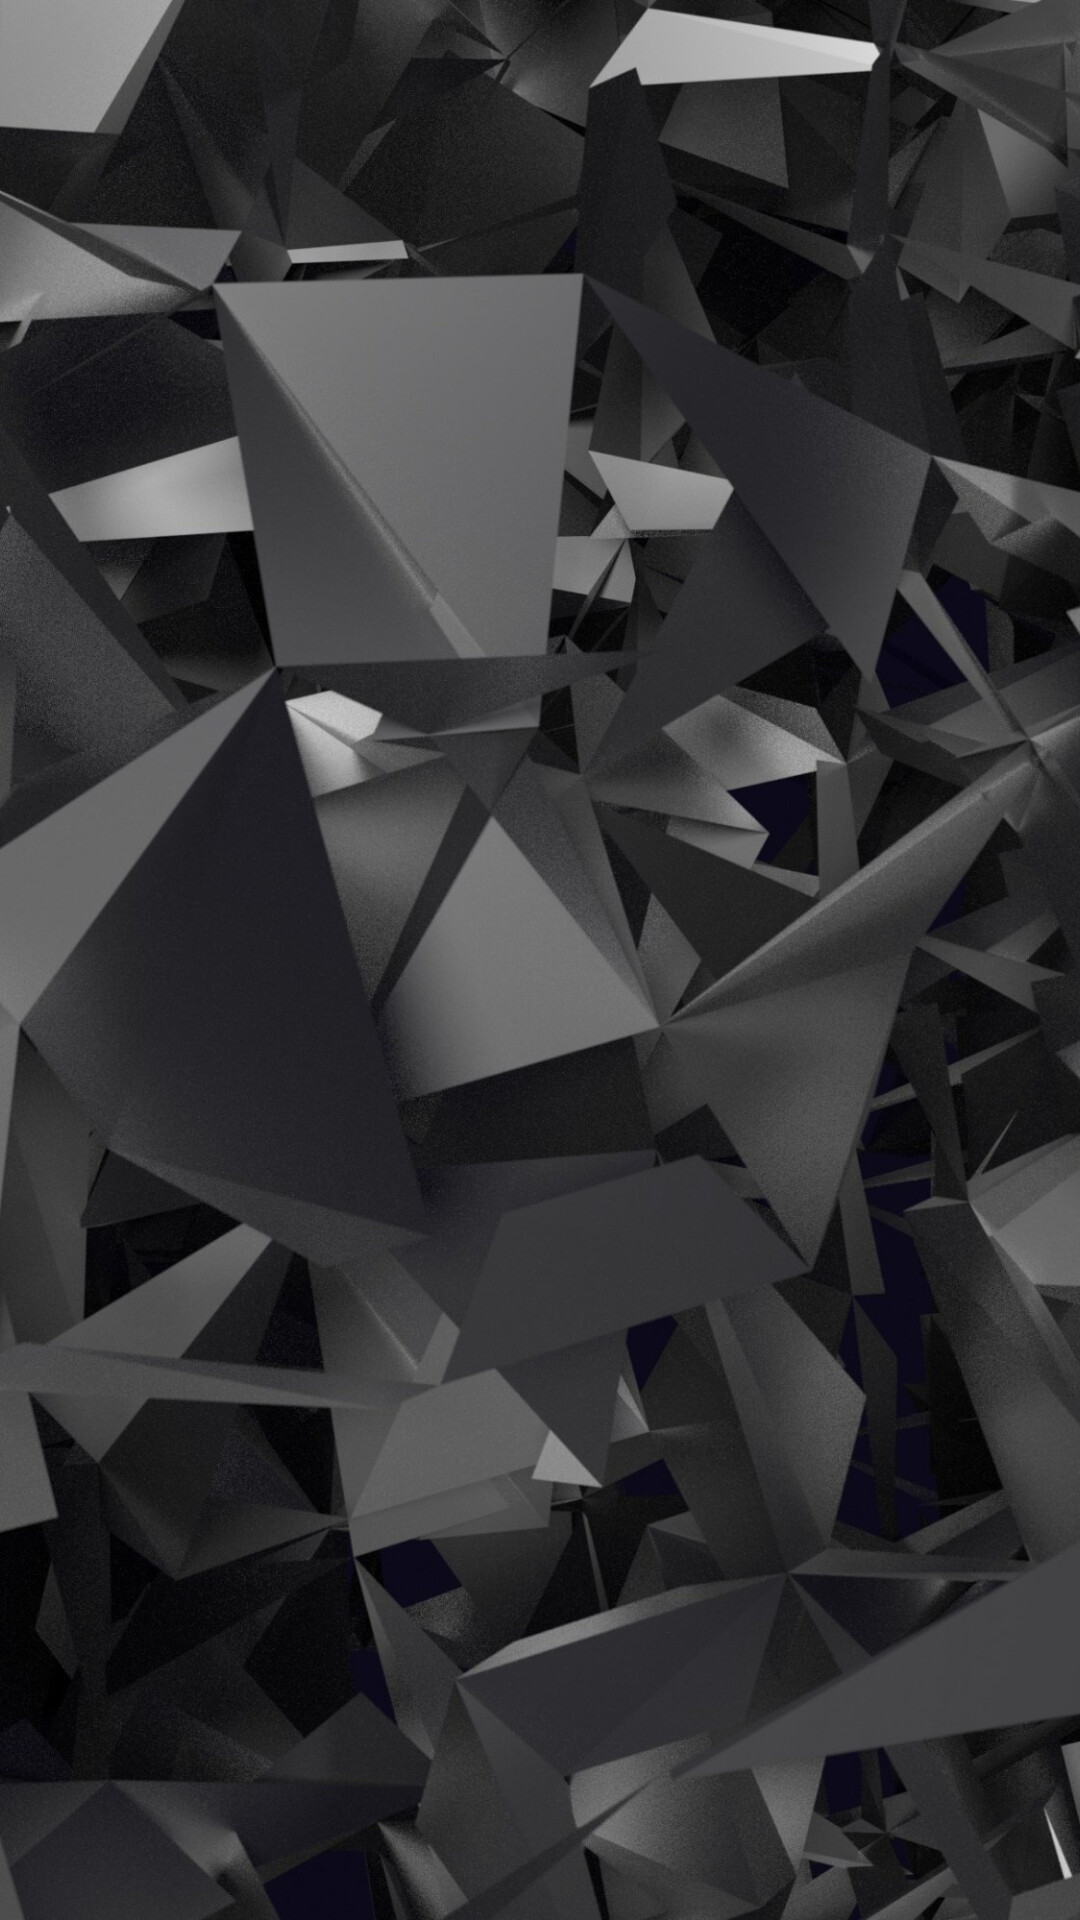 Geometric Abstract: Grey polygonal figures, Shadows, Trapezoids. 1080x1920 Full HD Wallpaper.